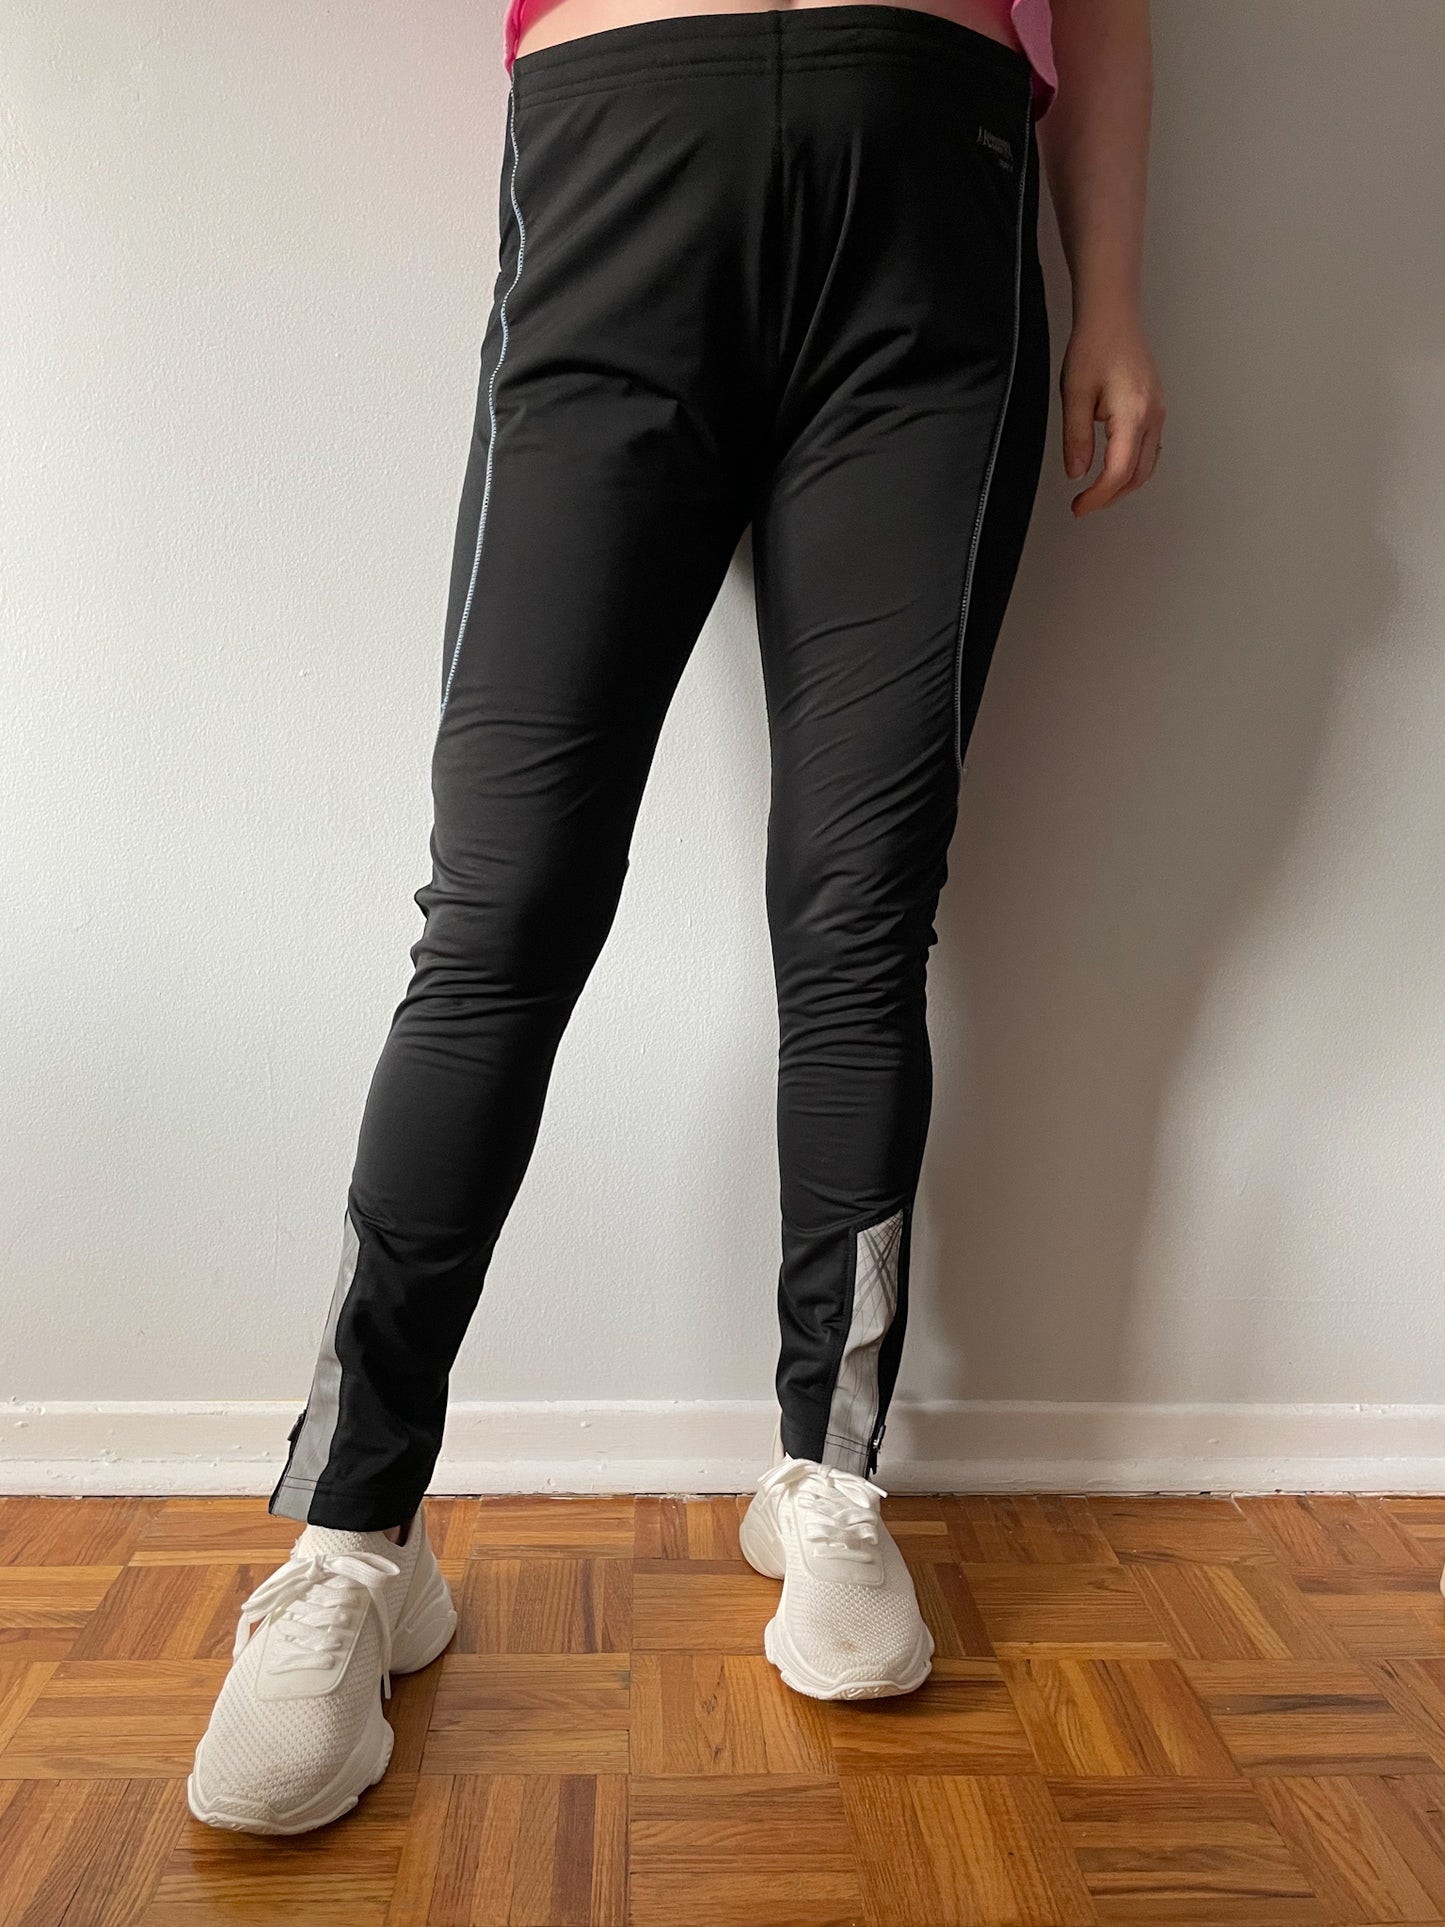 Running Room Black High Rise Black Reflective Zipper Ankle Running Pants - Medium